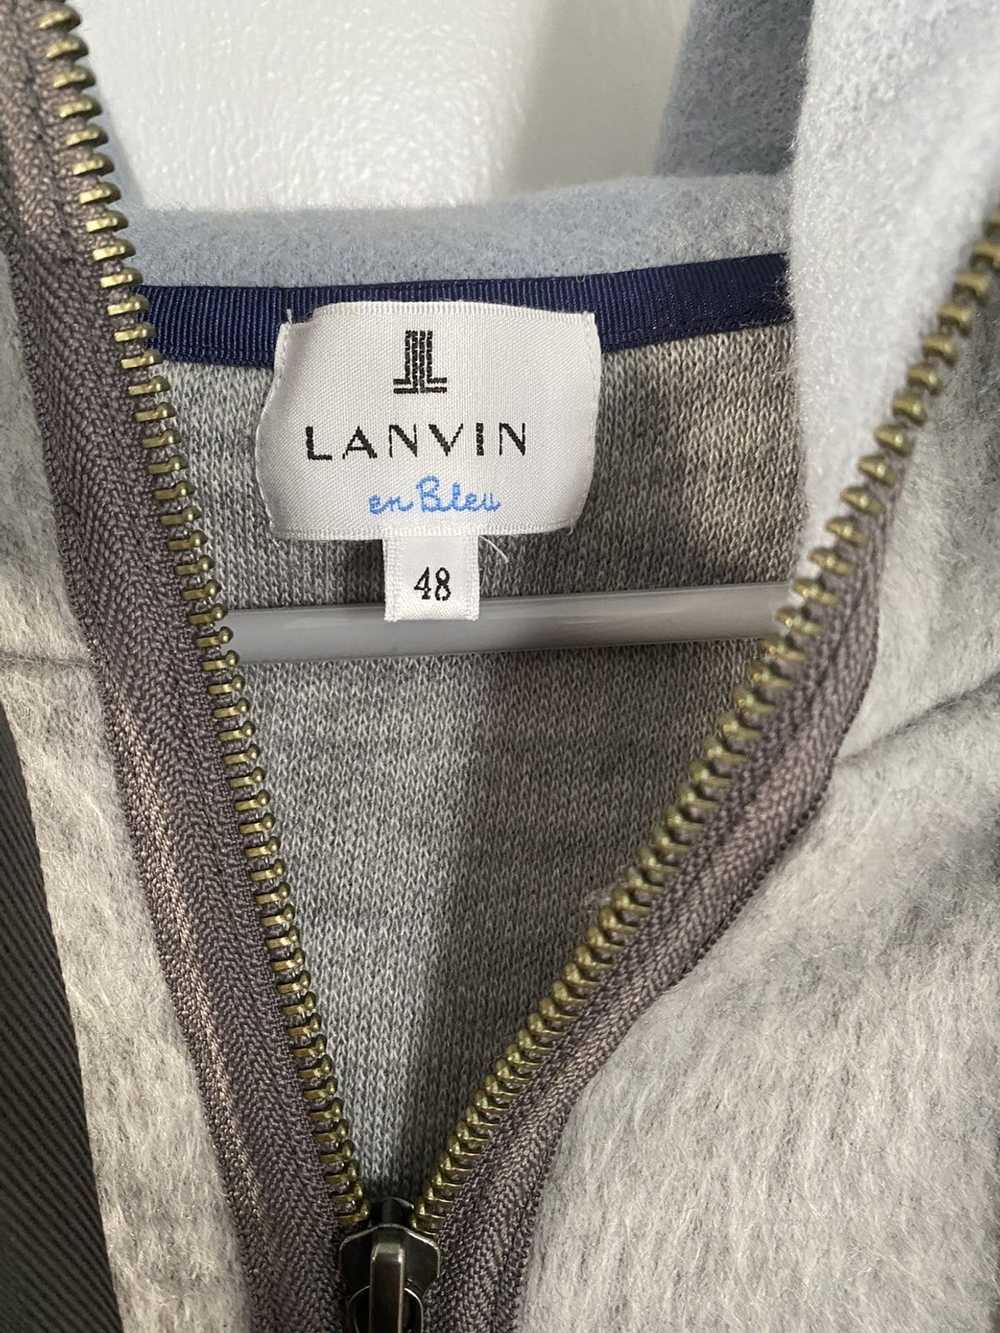 Lanvin lanvin hoodie - image 2